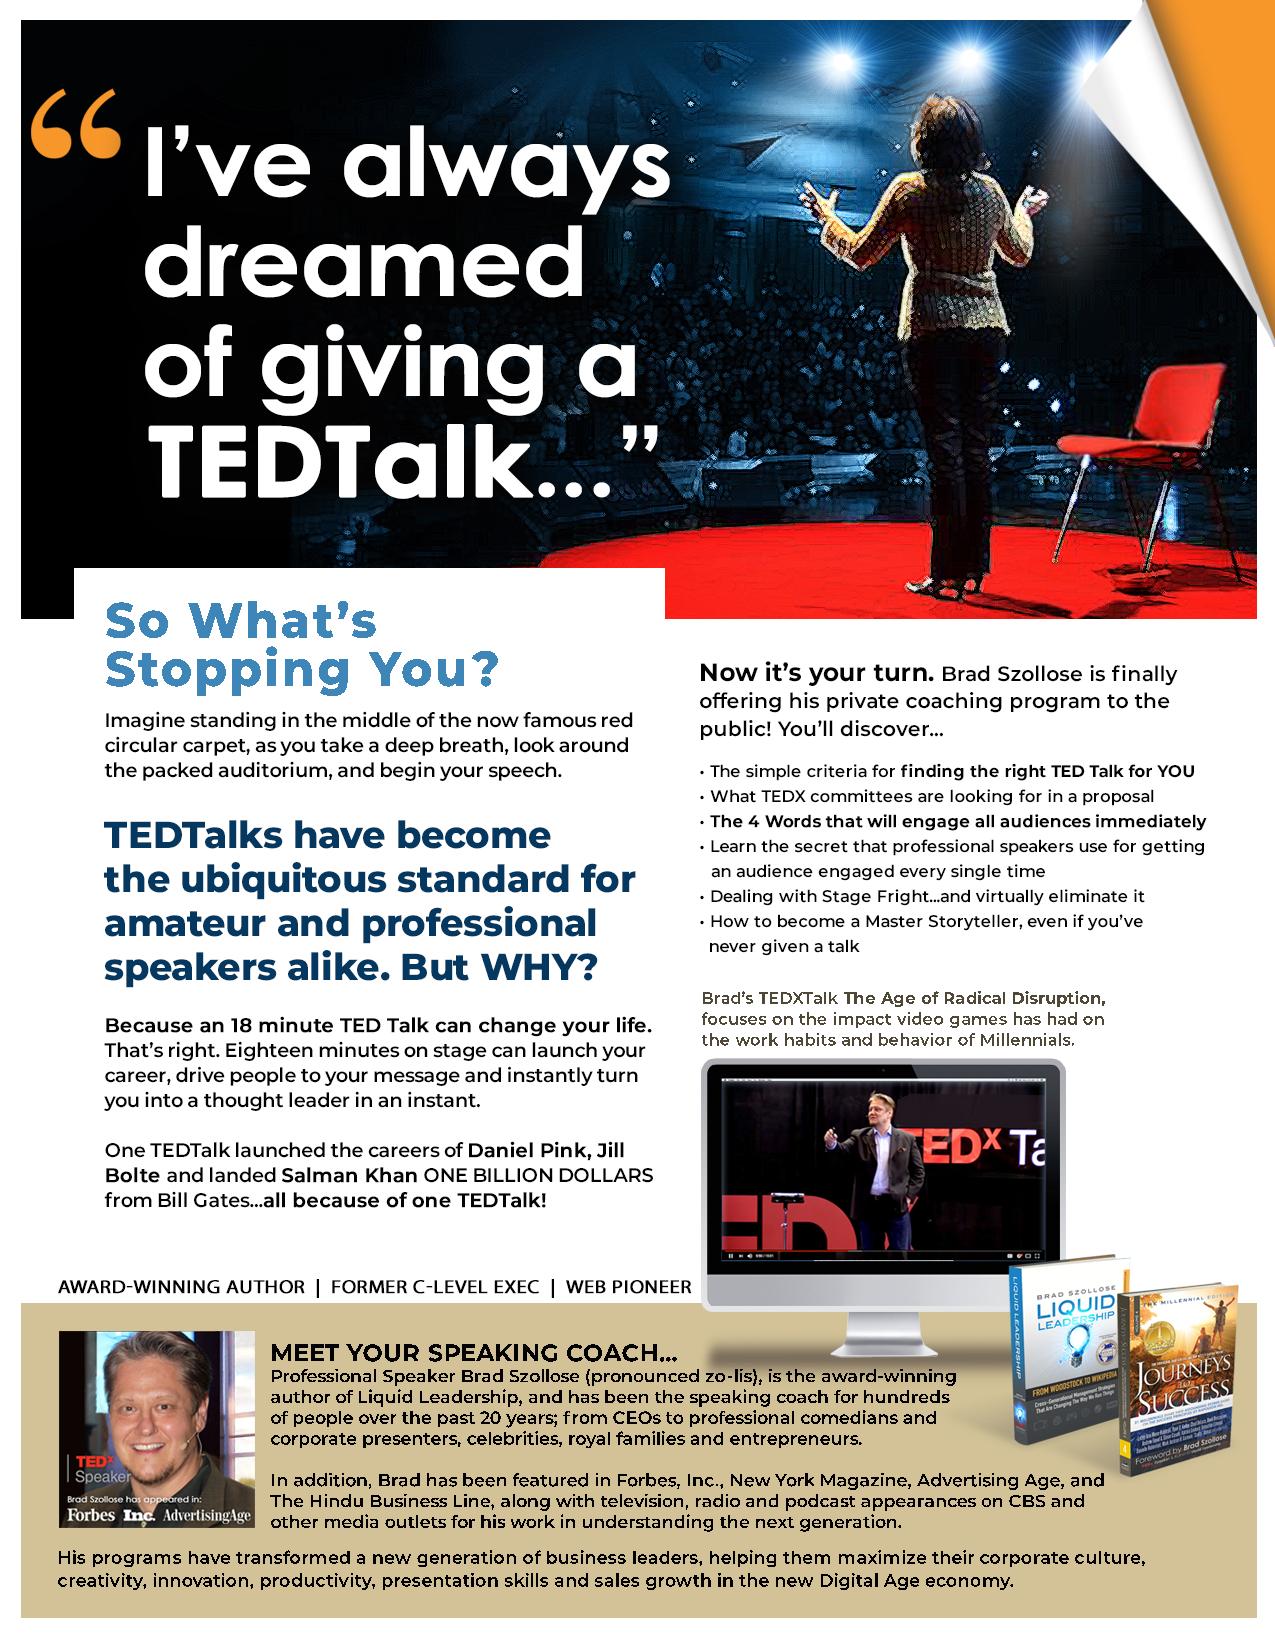 TEDTalk Mastery with Brad Szollose